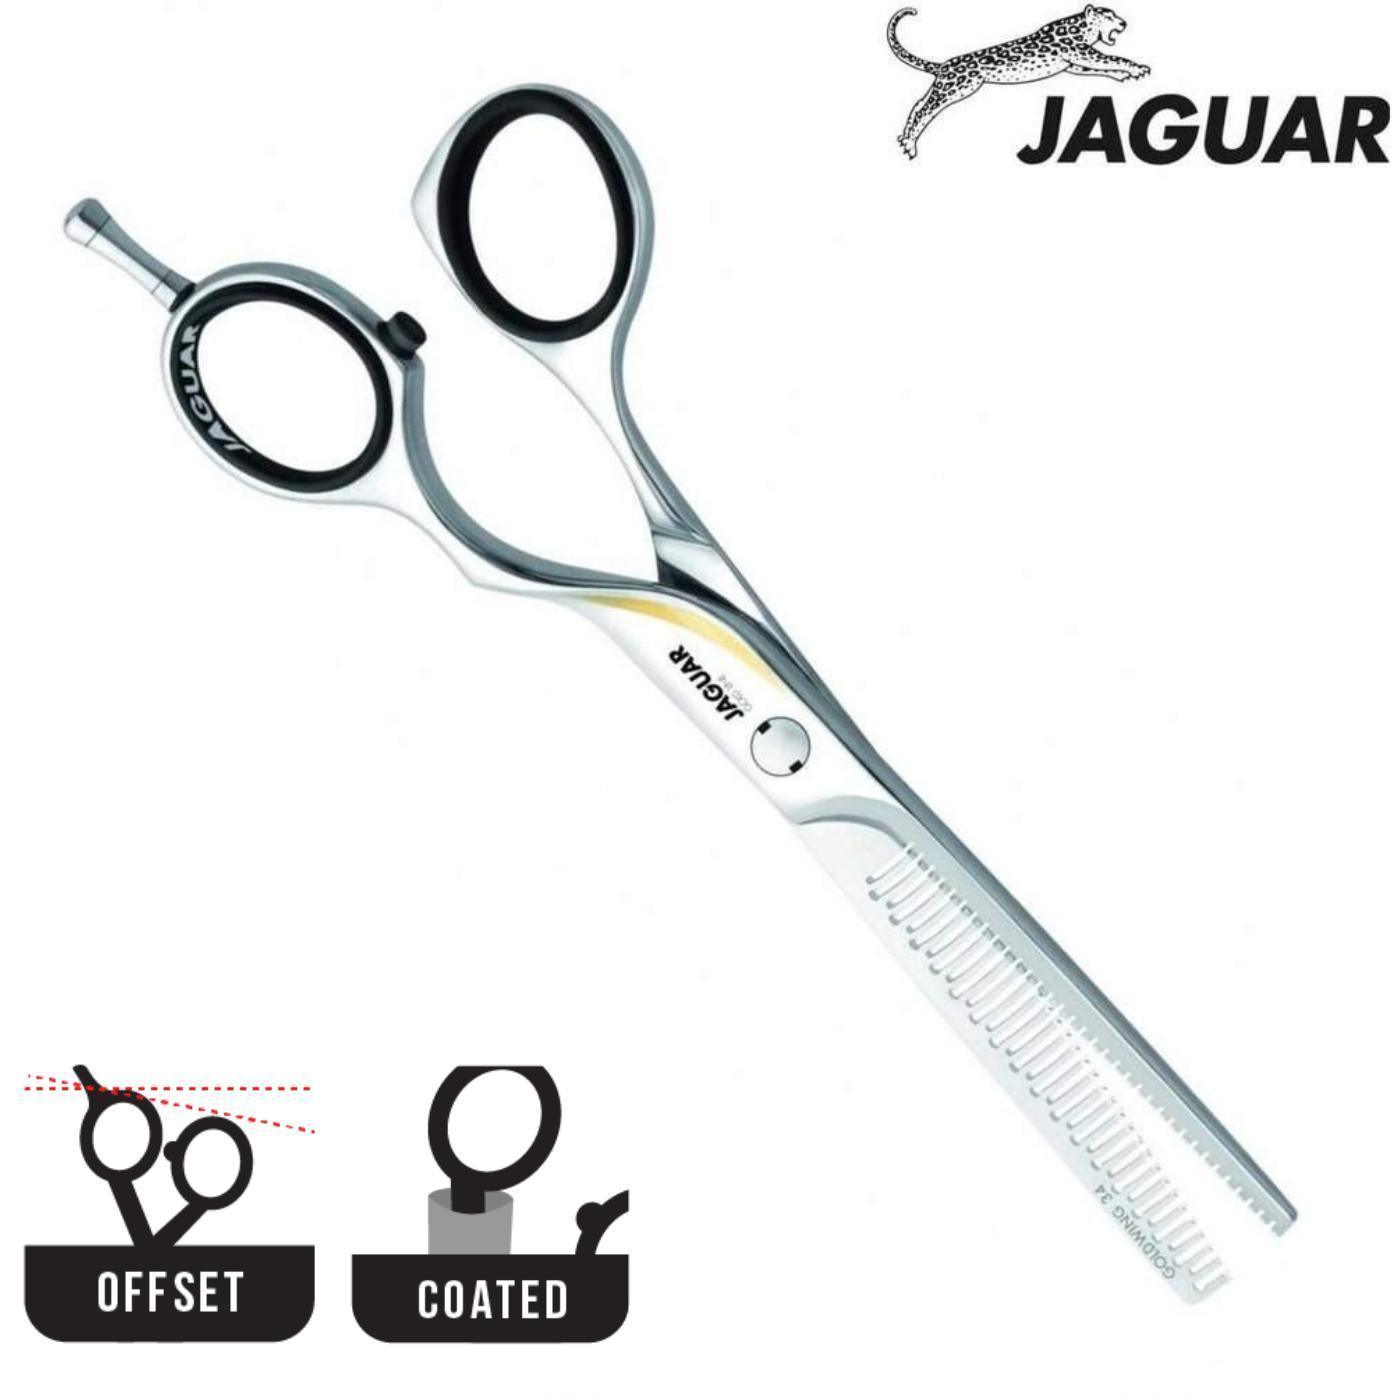 Jaguar Gold Line Goldwing Offset Thinning Scissors - Japan Scissors